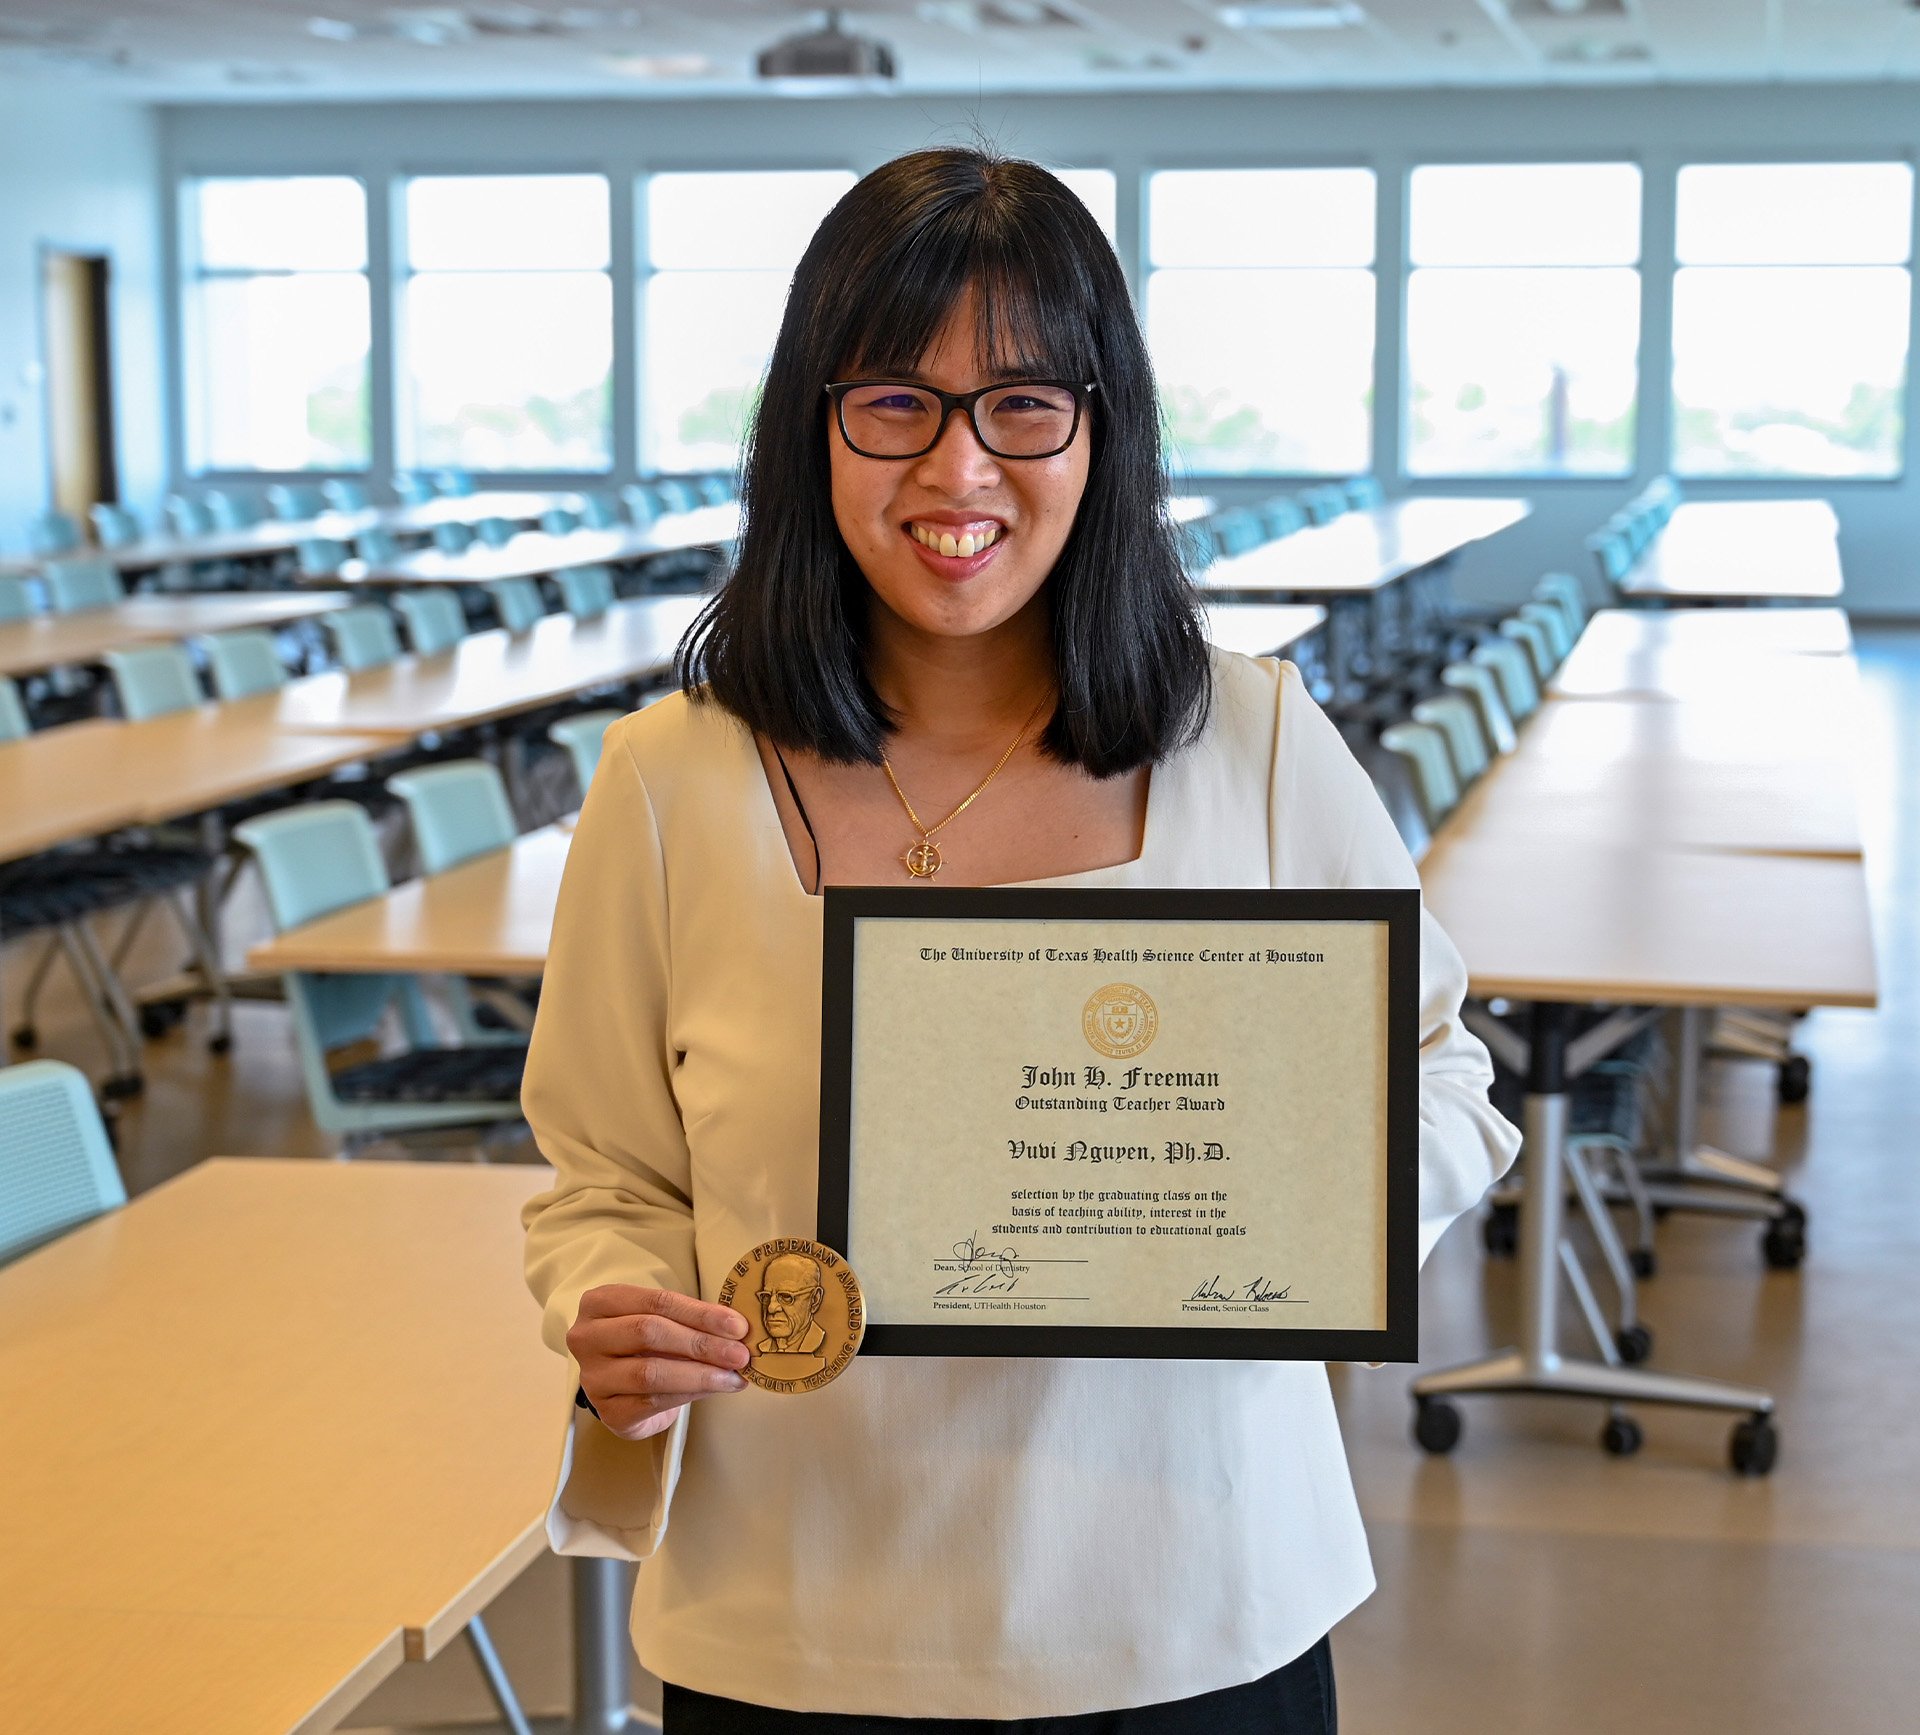 Dr. Vuvi Nguyen with her framed certificate for the John H. Freeman Award for Faculty Teaching.